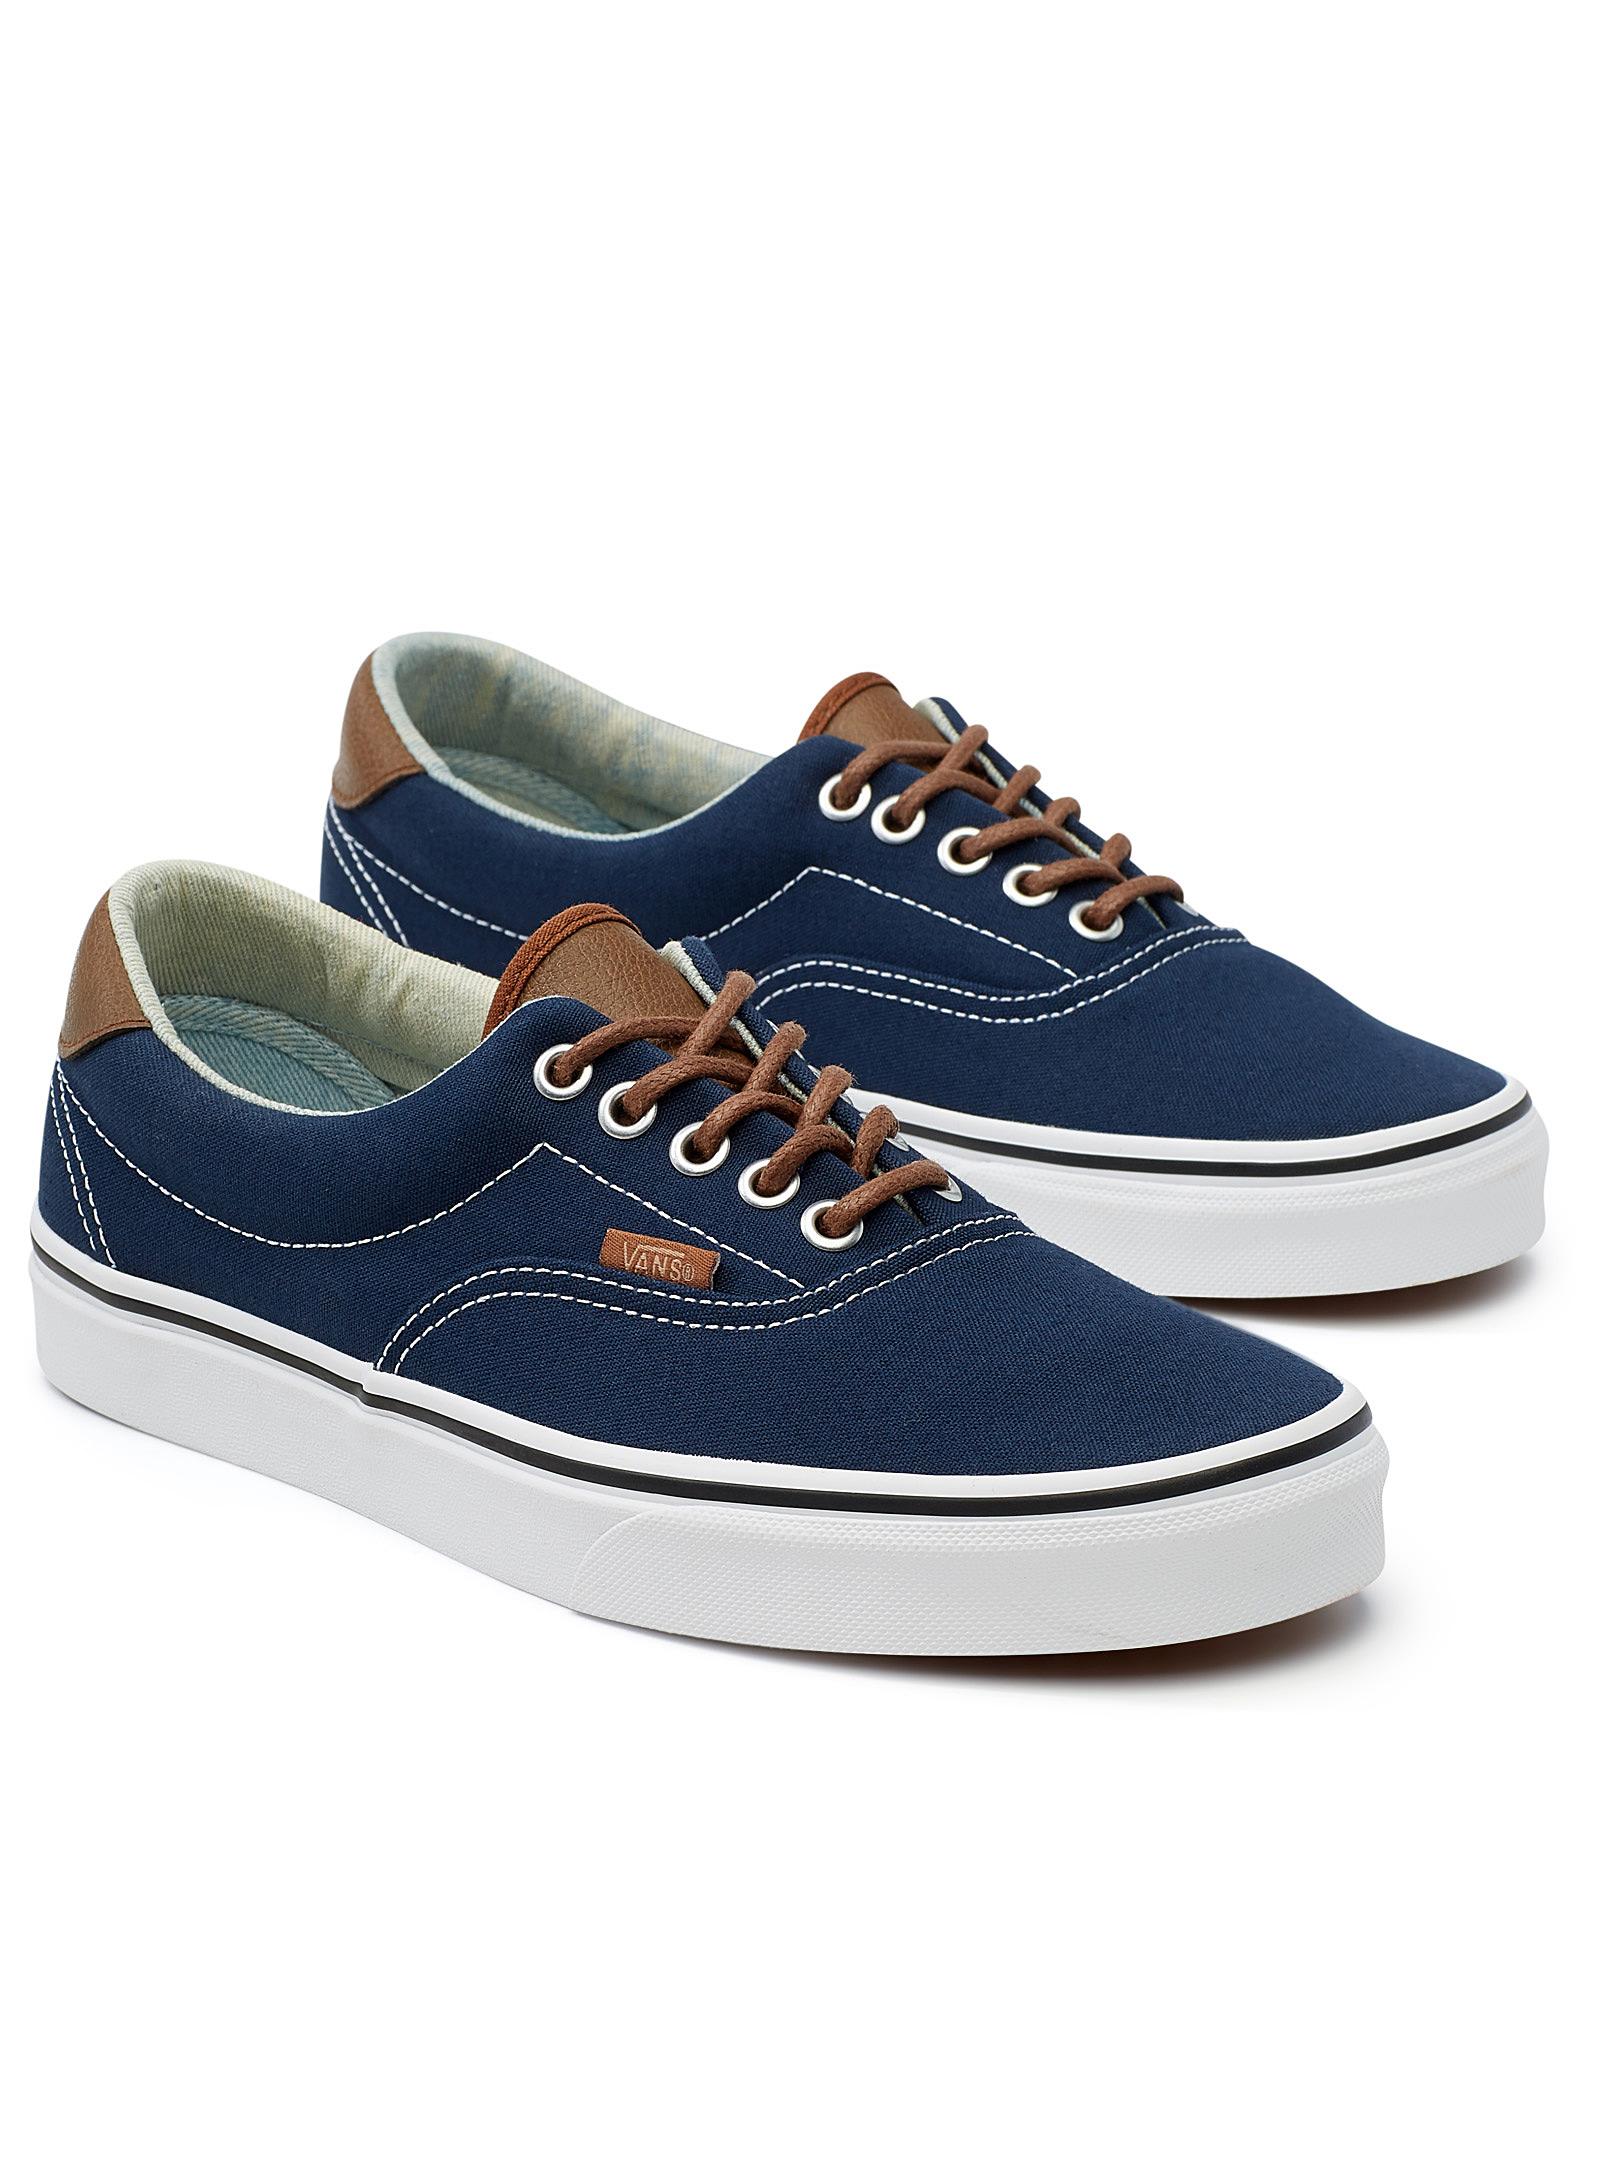 Vans Suede Era 59 Shoe in Marine Blue (Blue) for Men - Save 25% | Lyst